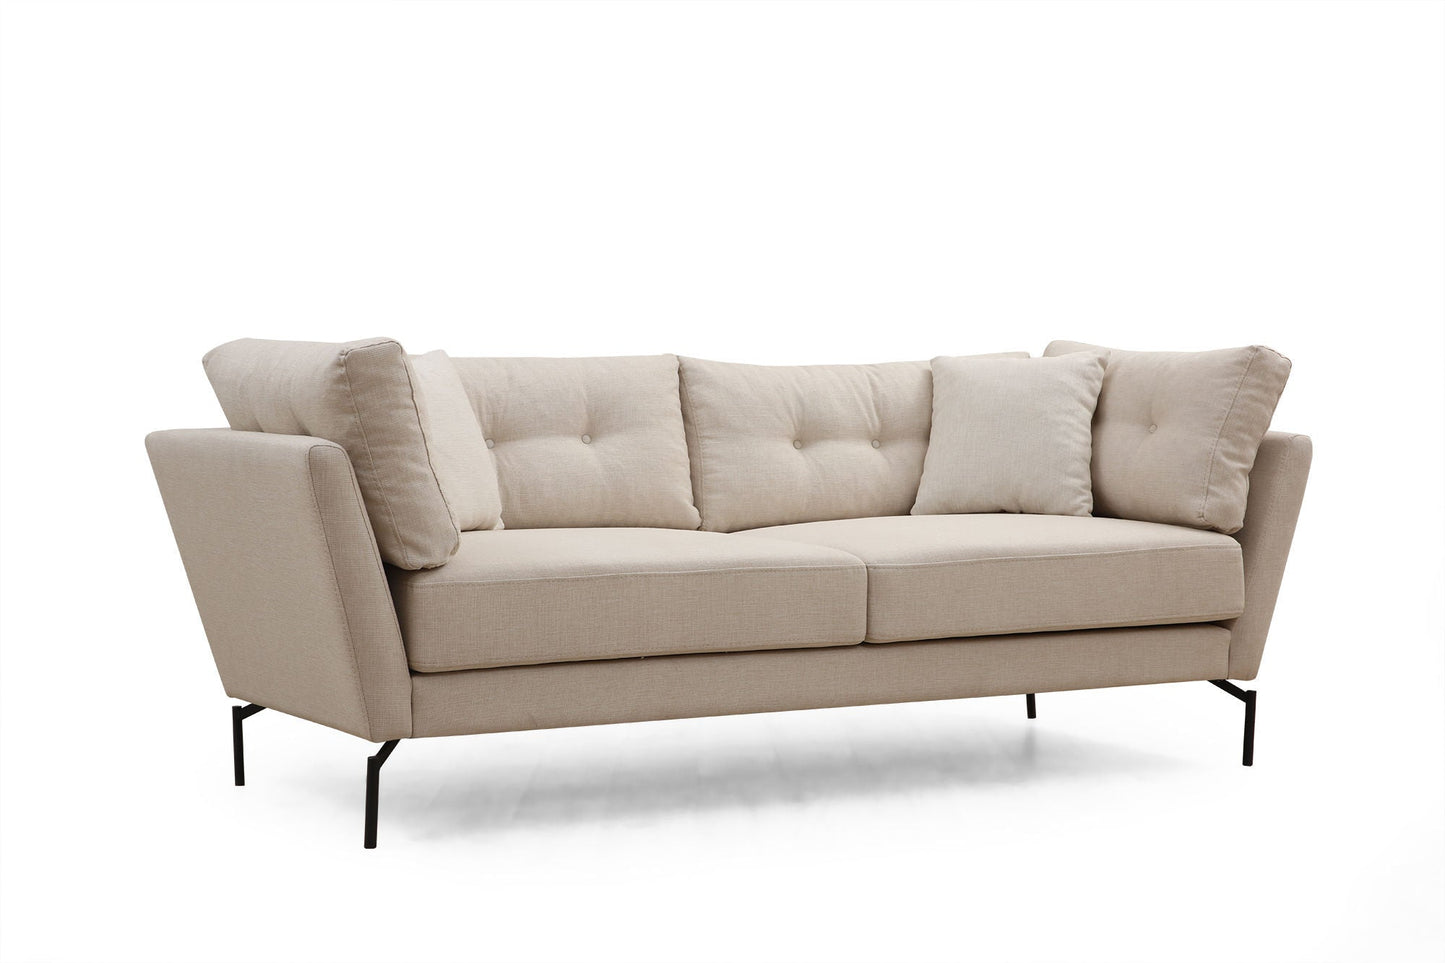 Mapa - Creme - 3-sæders sofa / Outlet